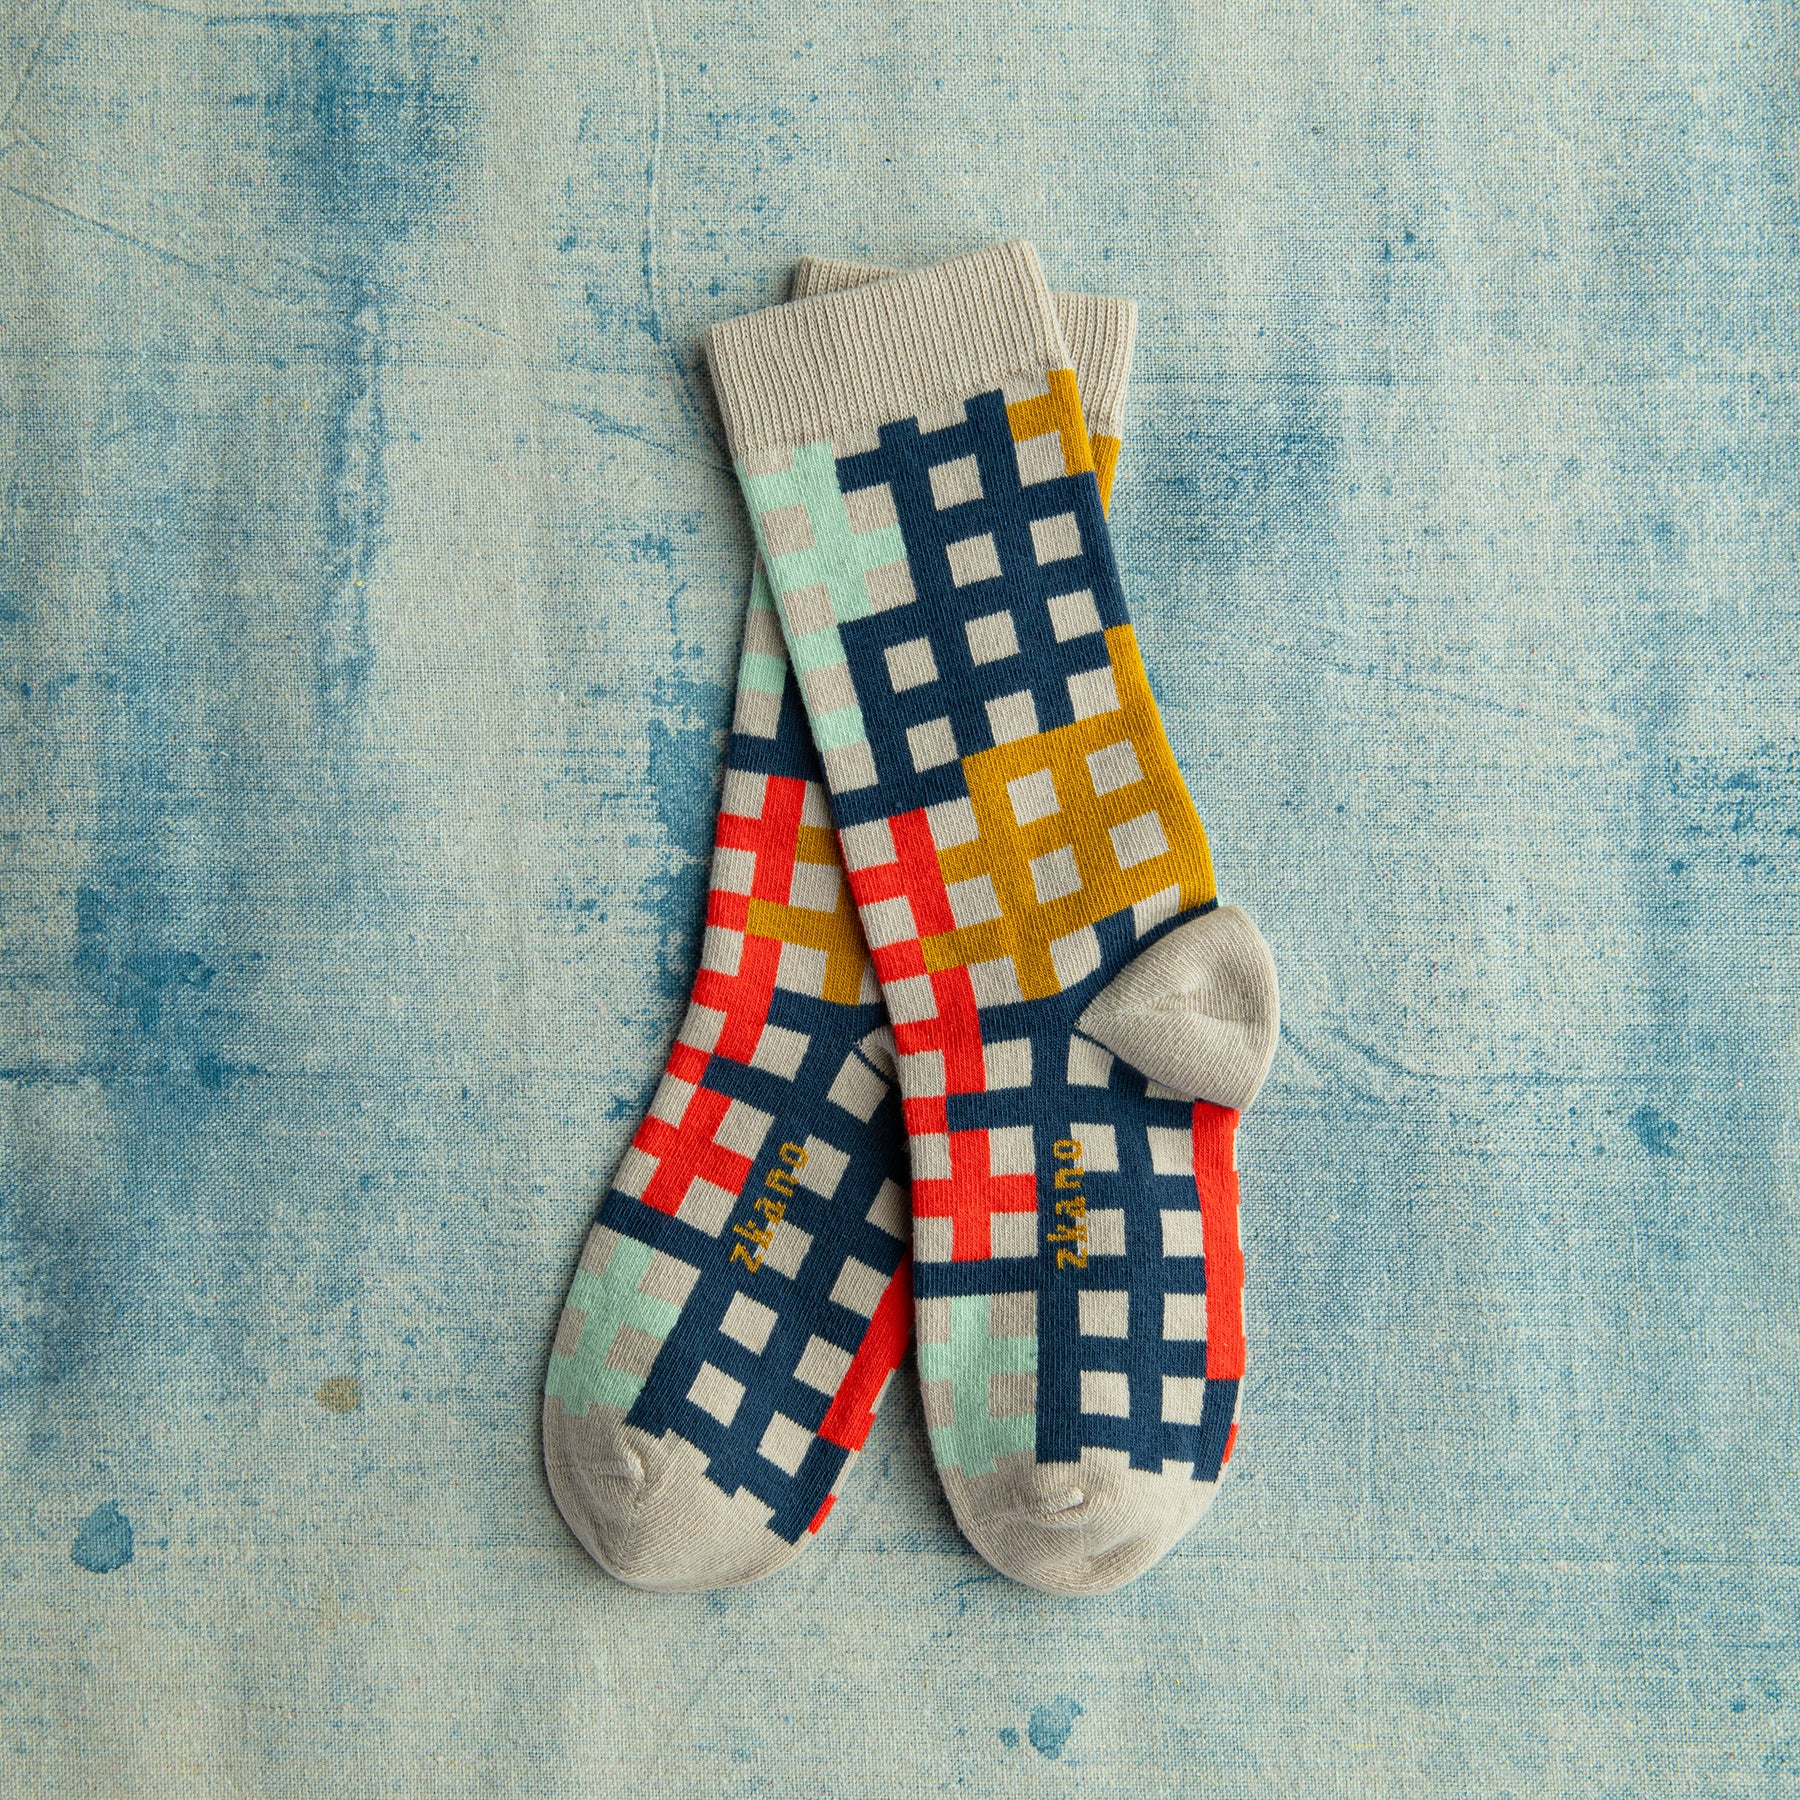 zkano - Organic Cotton Socks for Women, Men & Kids, Made in USA